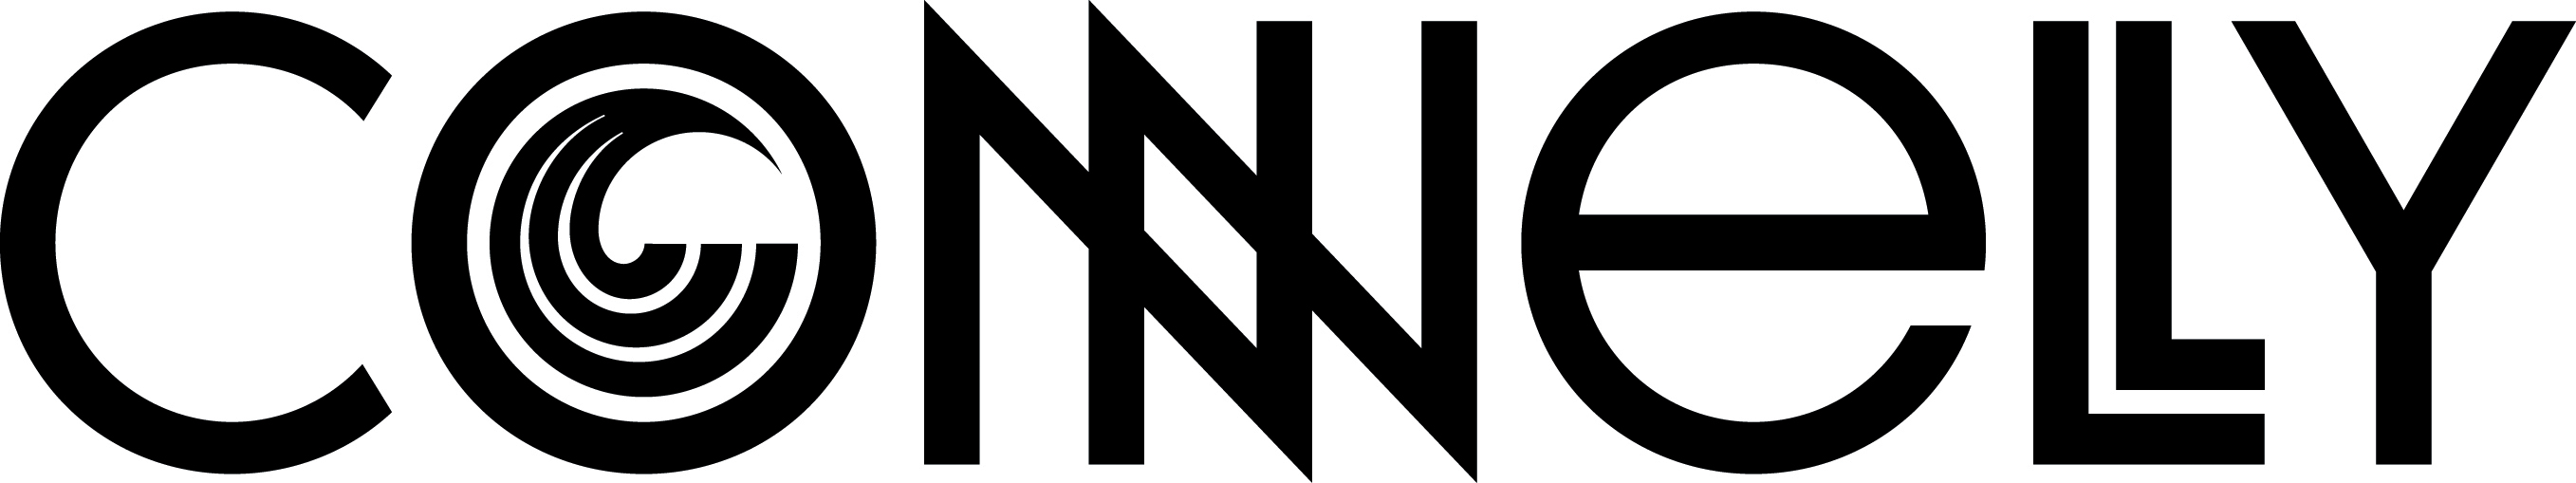 Connelly Creative, Inc. Logo photo - 1